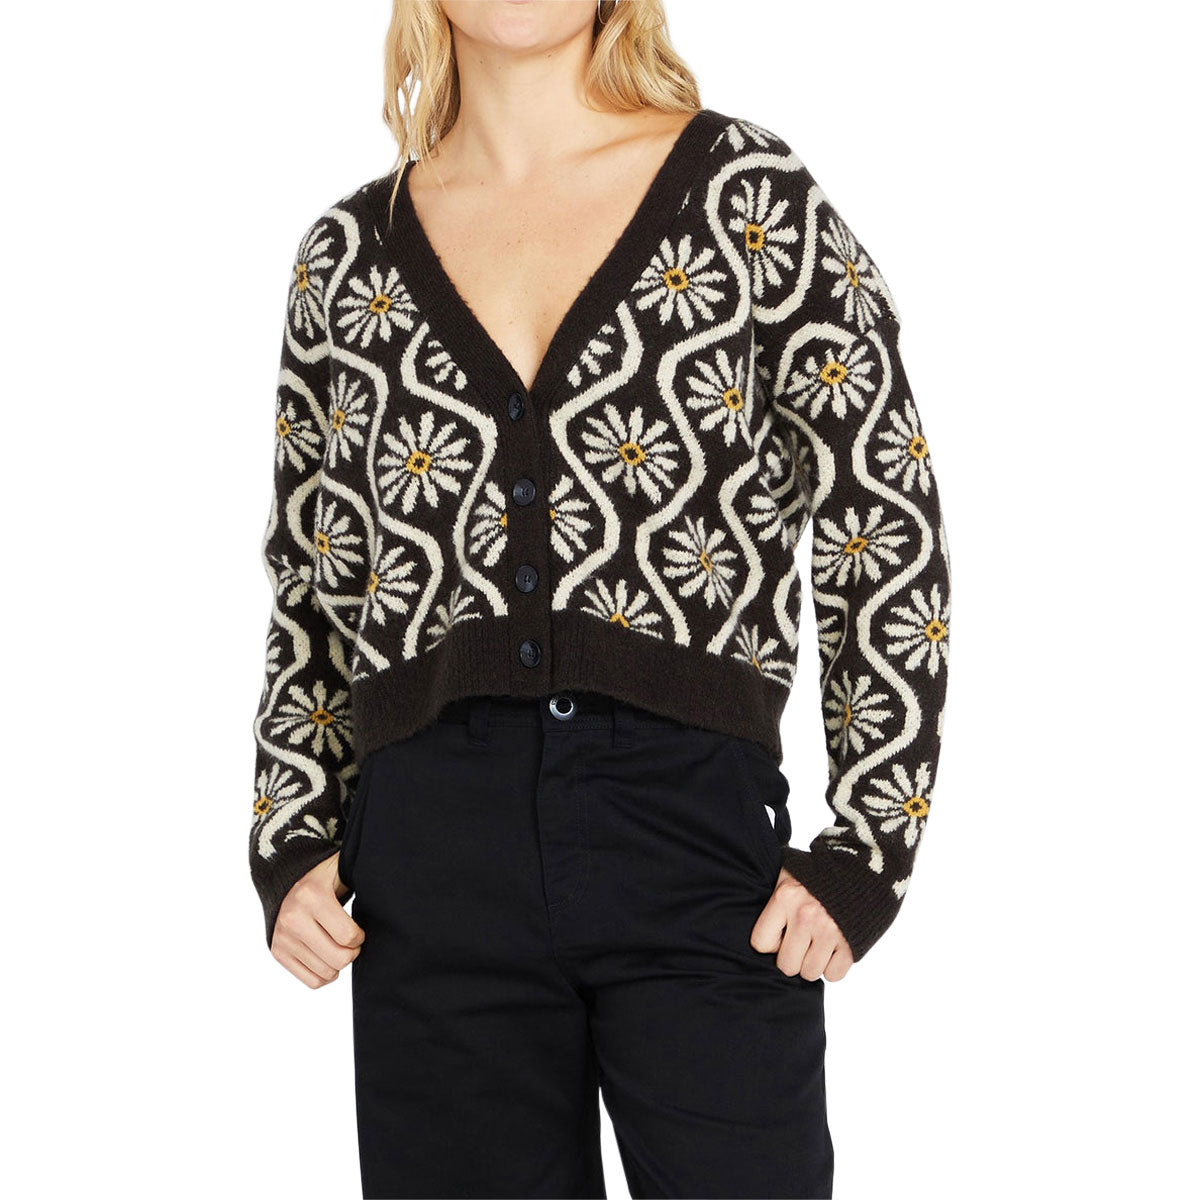 Volcom Womens Daizy Lady Cardigan Sweater - Vintage Black image 1